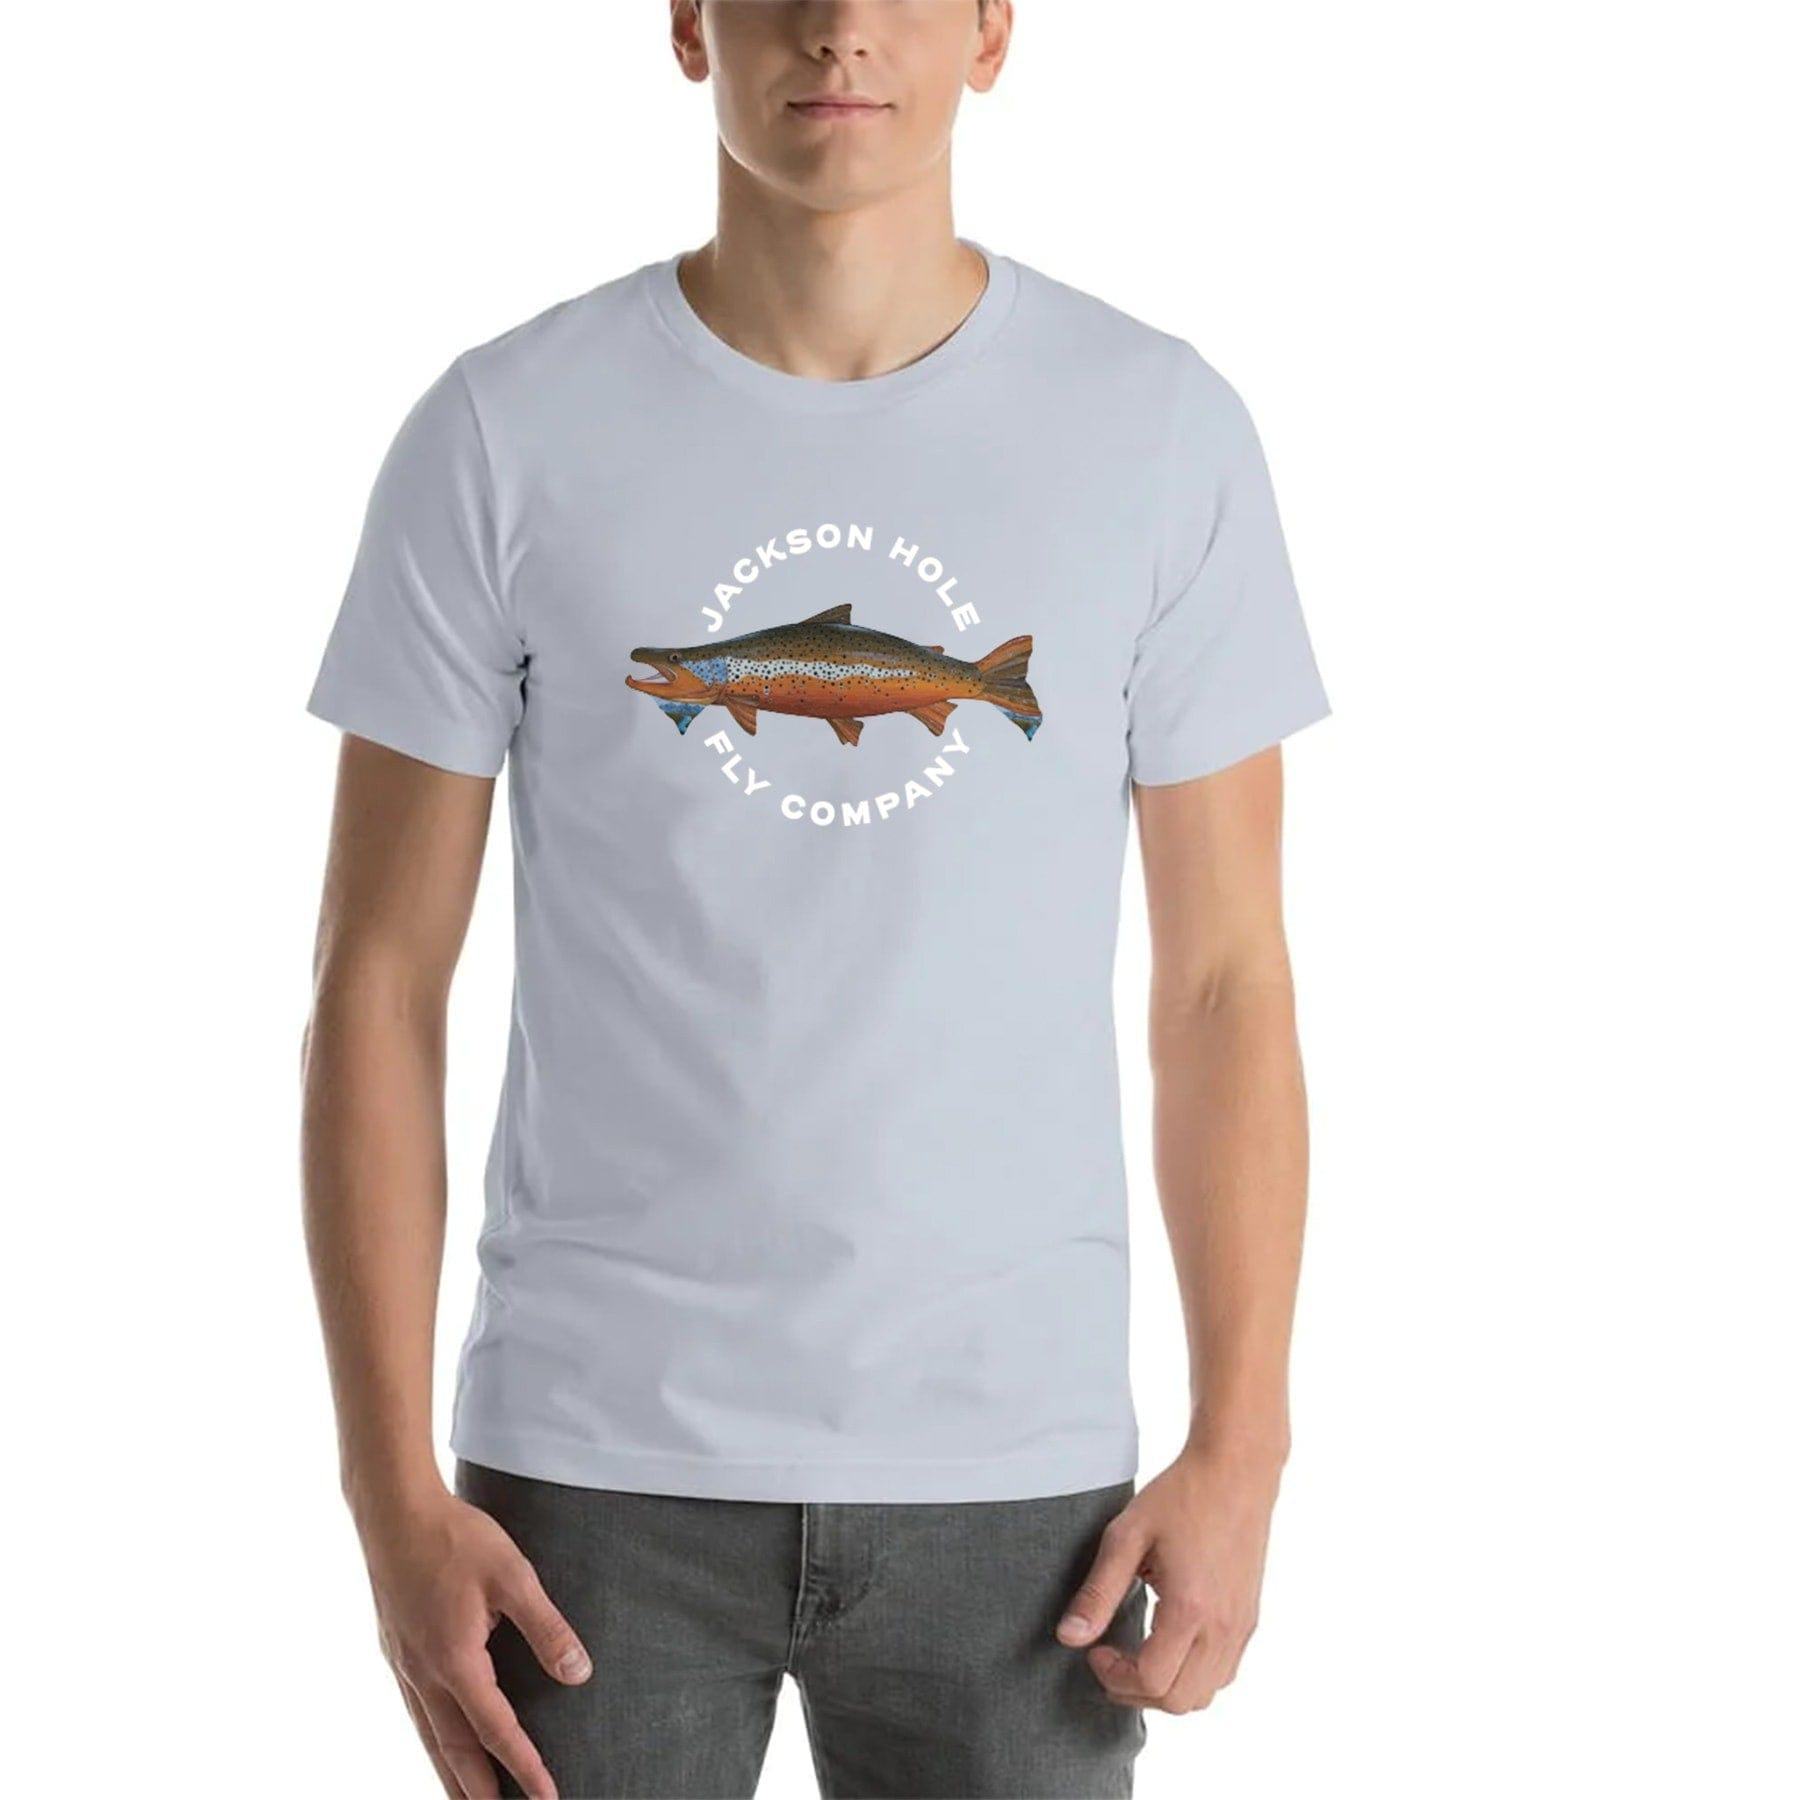 Diamond Logo T-Shirt - Allen Fly Fishing